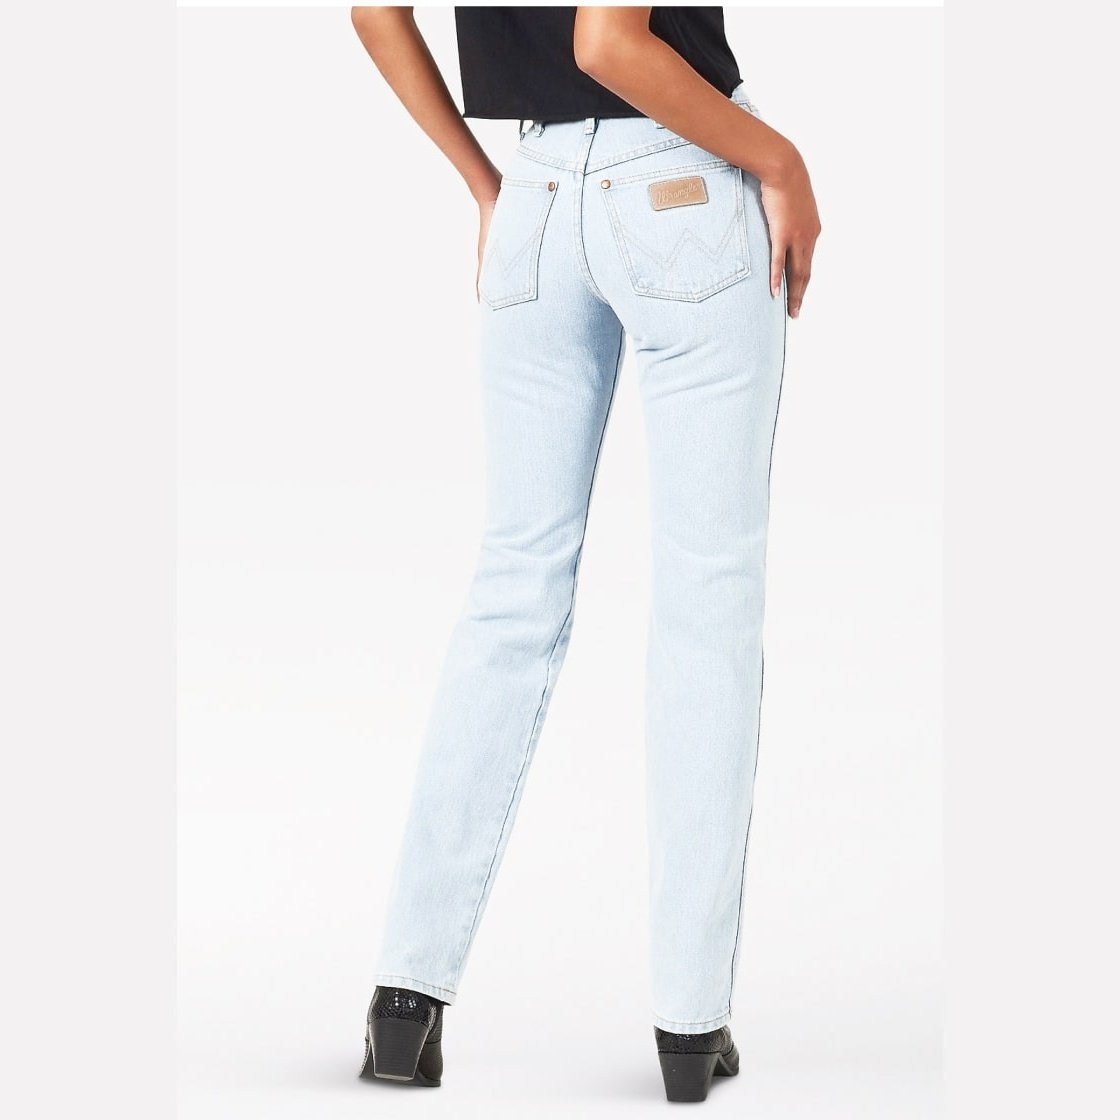 Wrangler Women’s Jeans Cowboy Cut Non-Stretch Light Wash 1014MWZGH - Wrangler